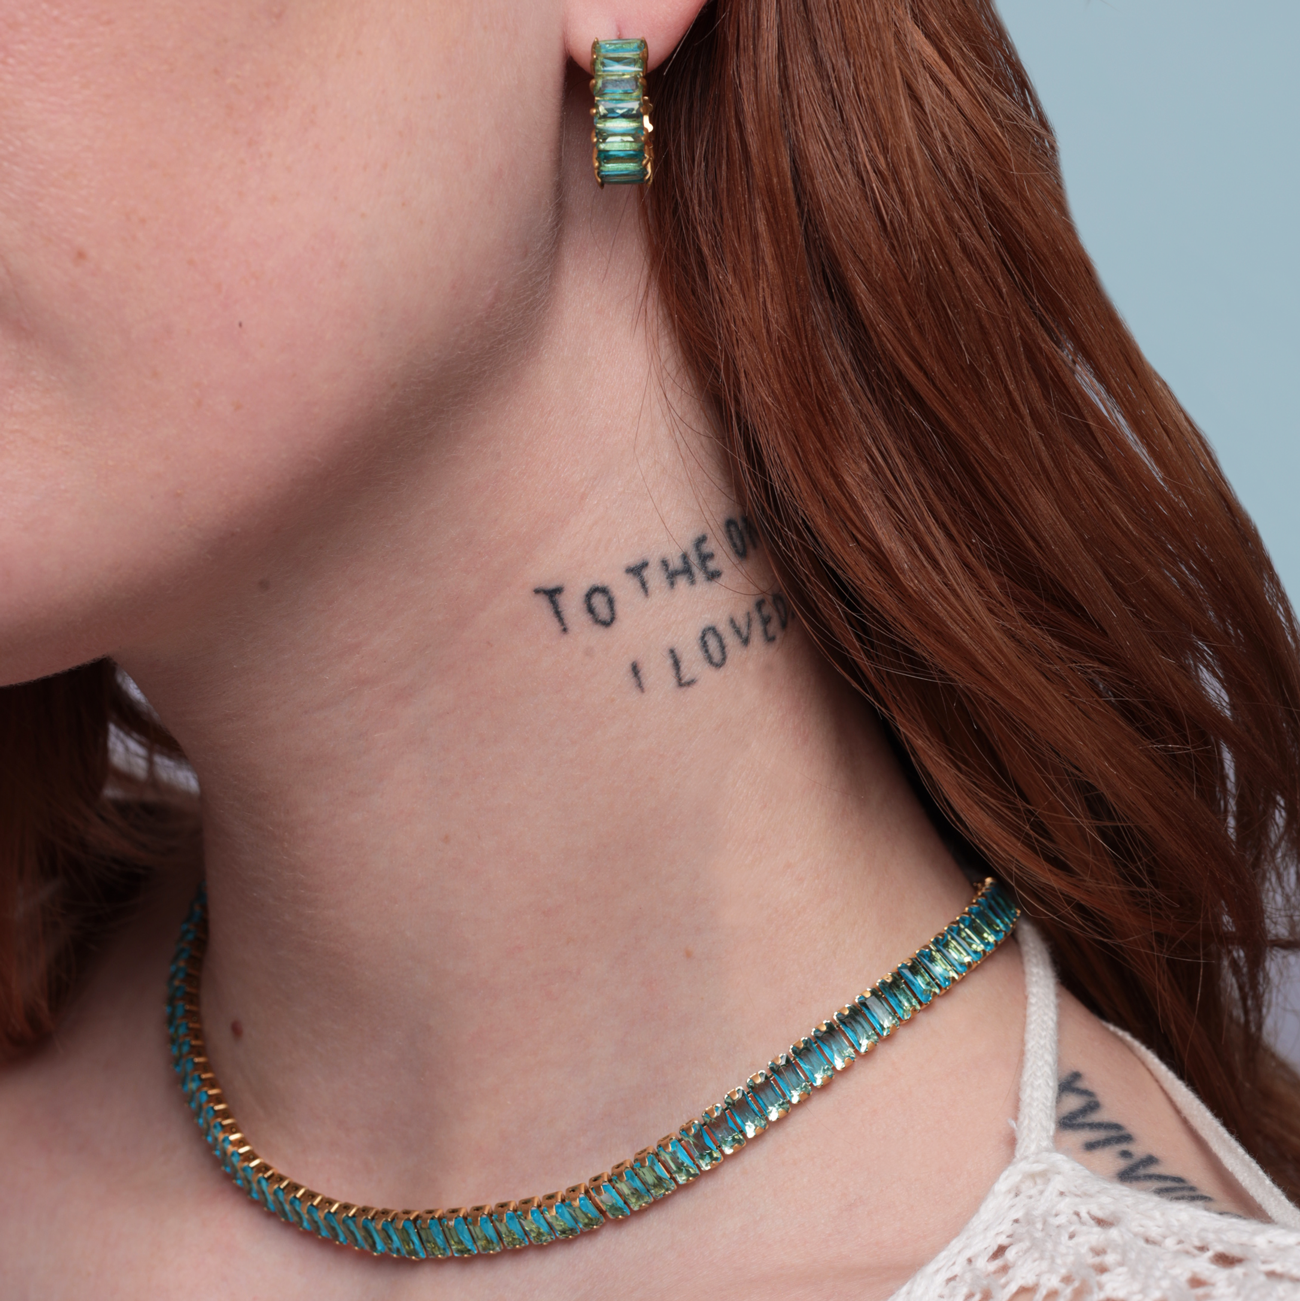 Haley Crystal earrings - Turquoise